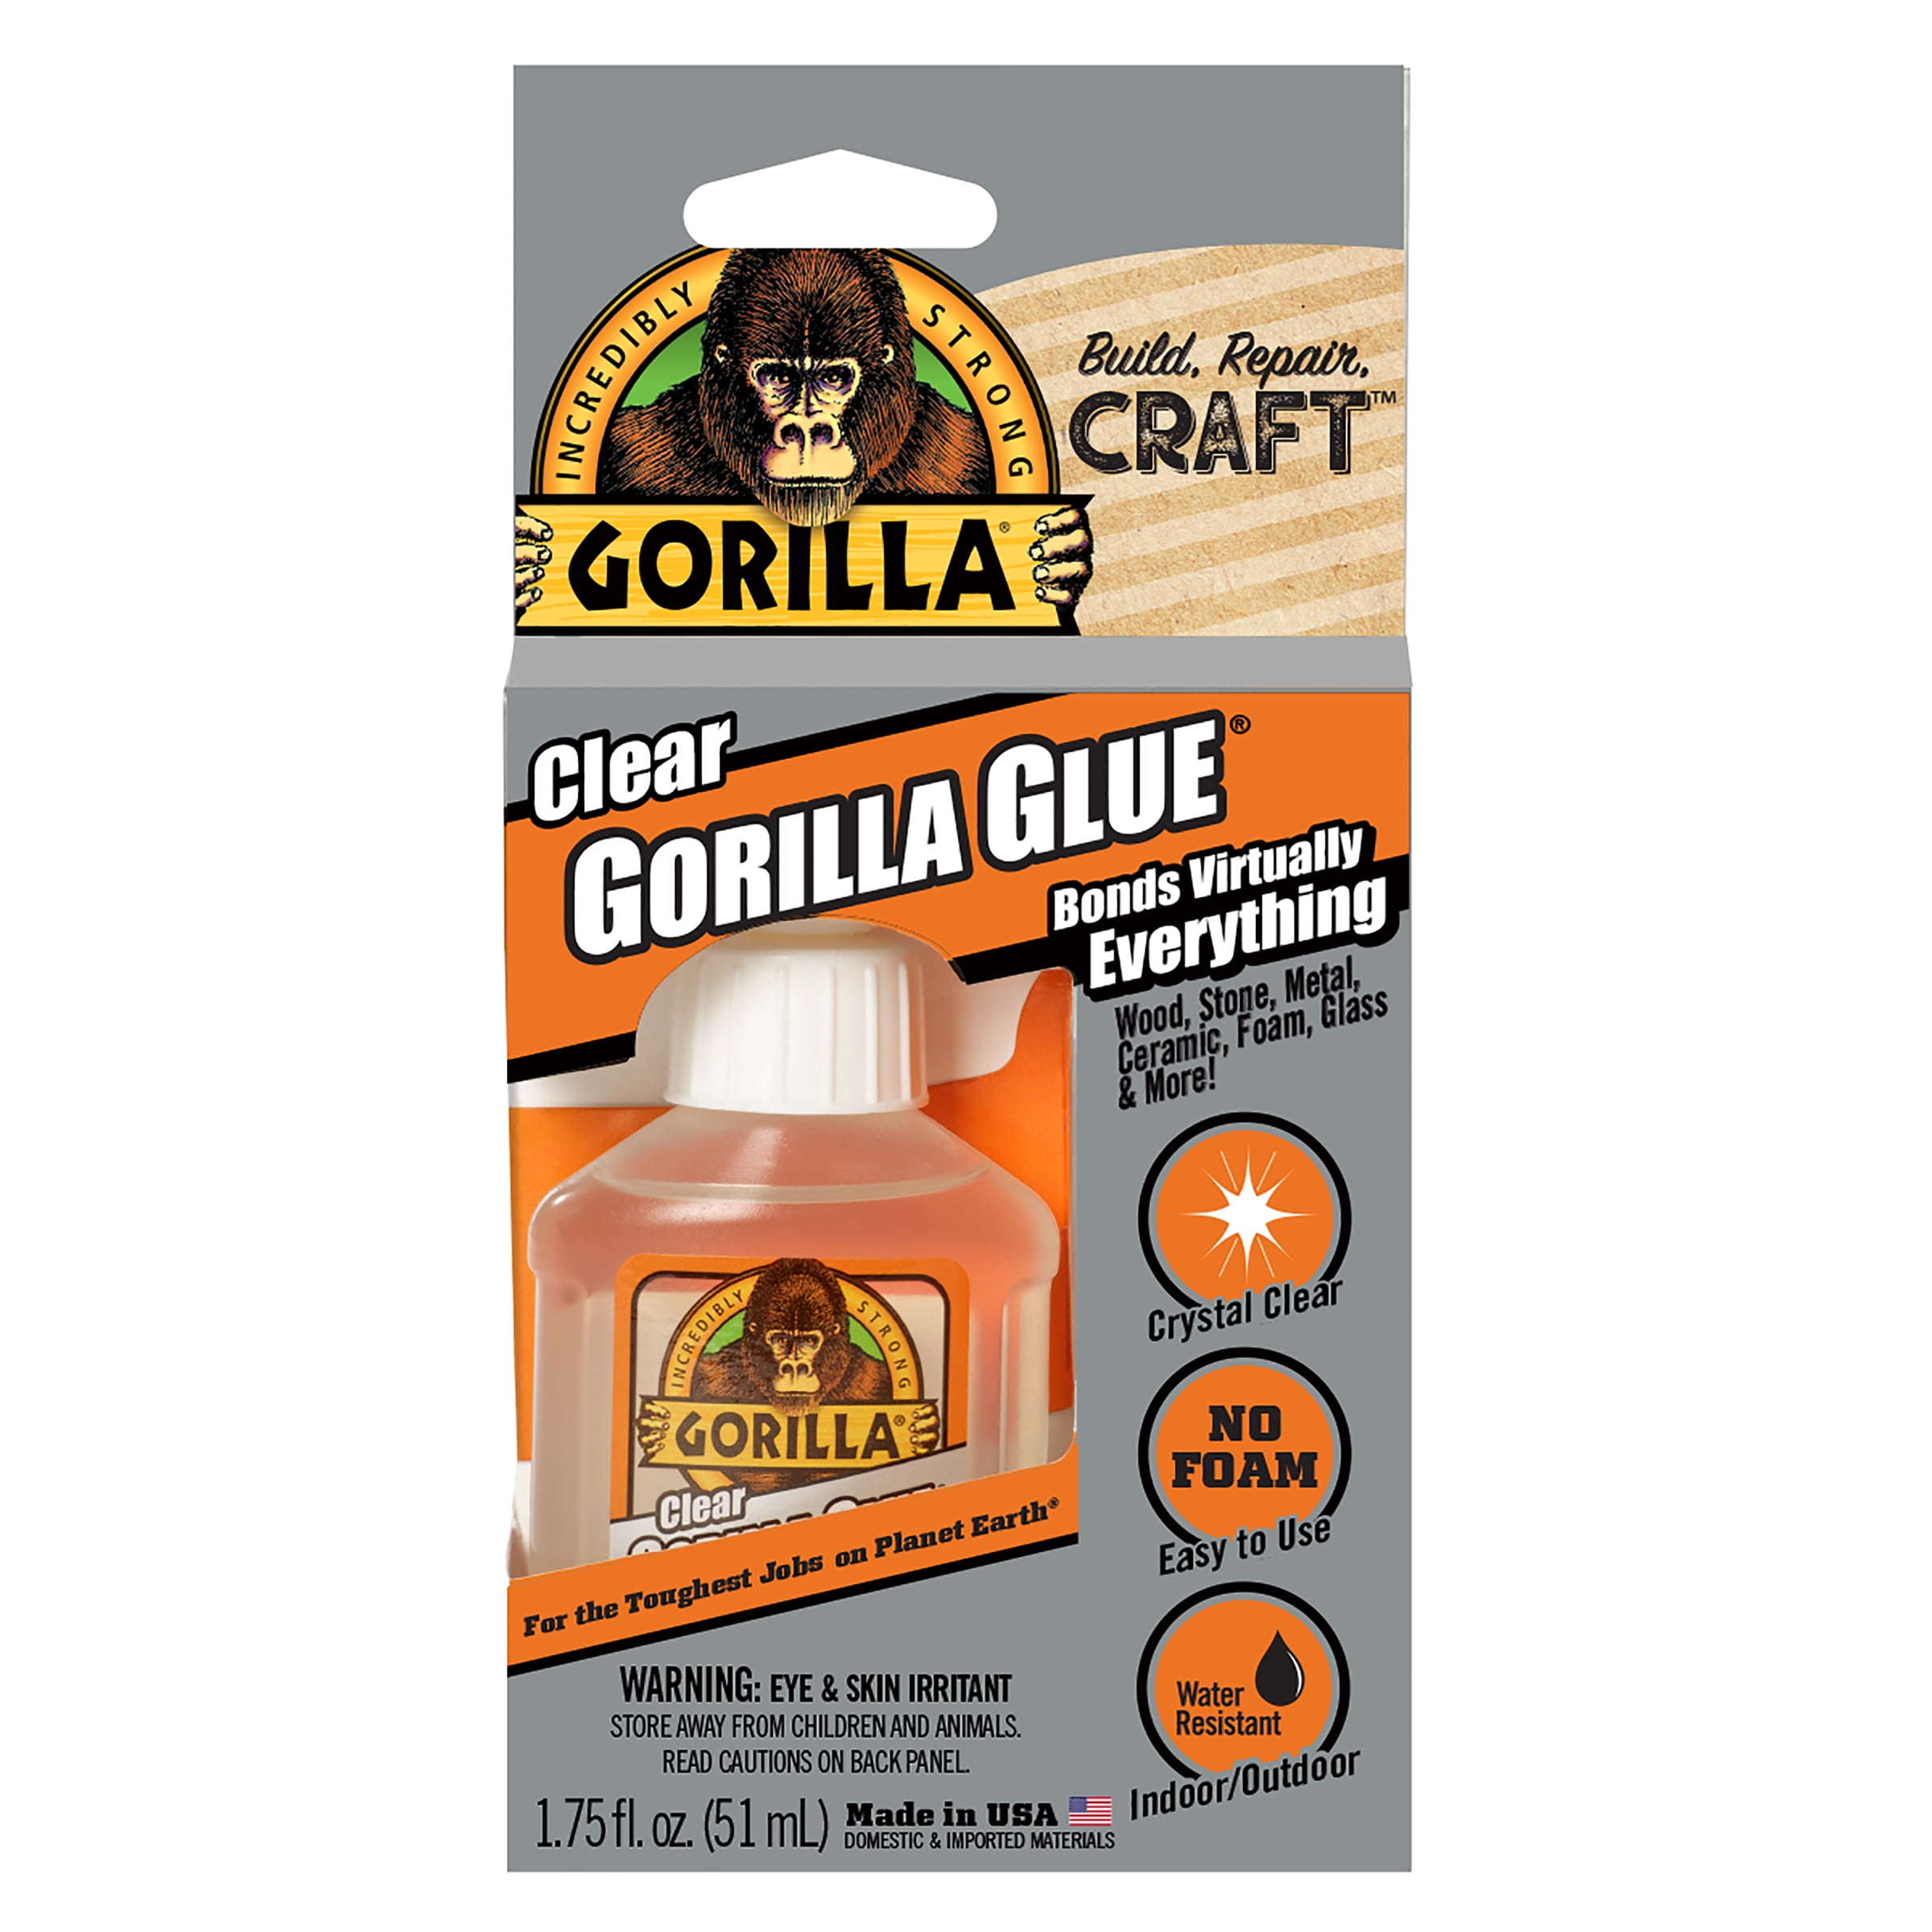 Gorilla Glue Clear Gorilla Glue 1.75 Oz. 4500102 – Good's Store Online